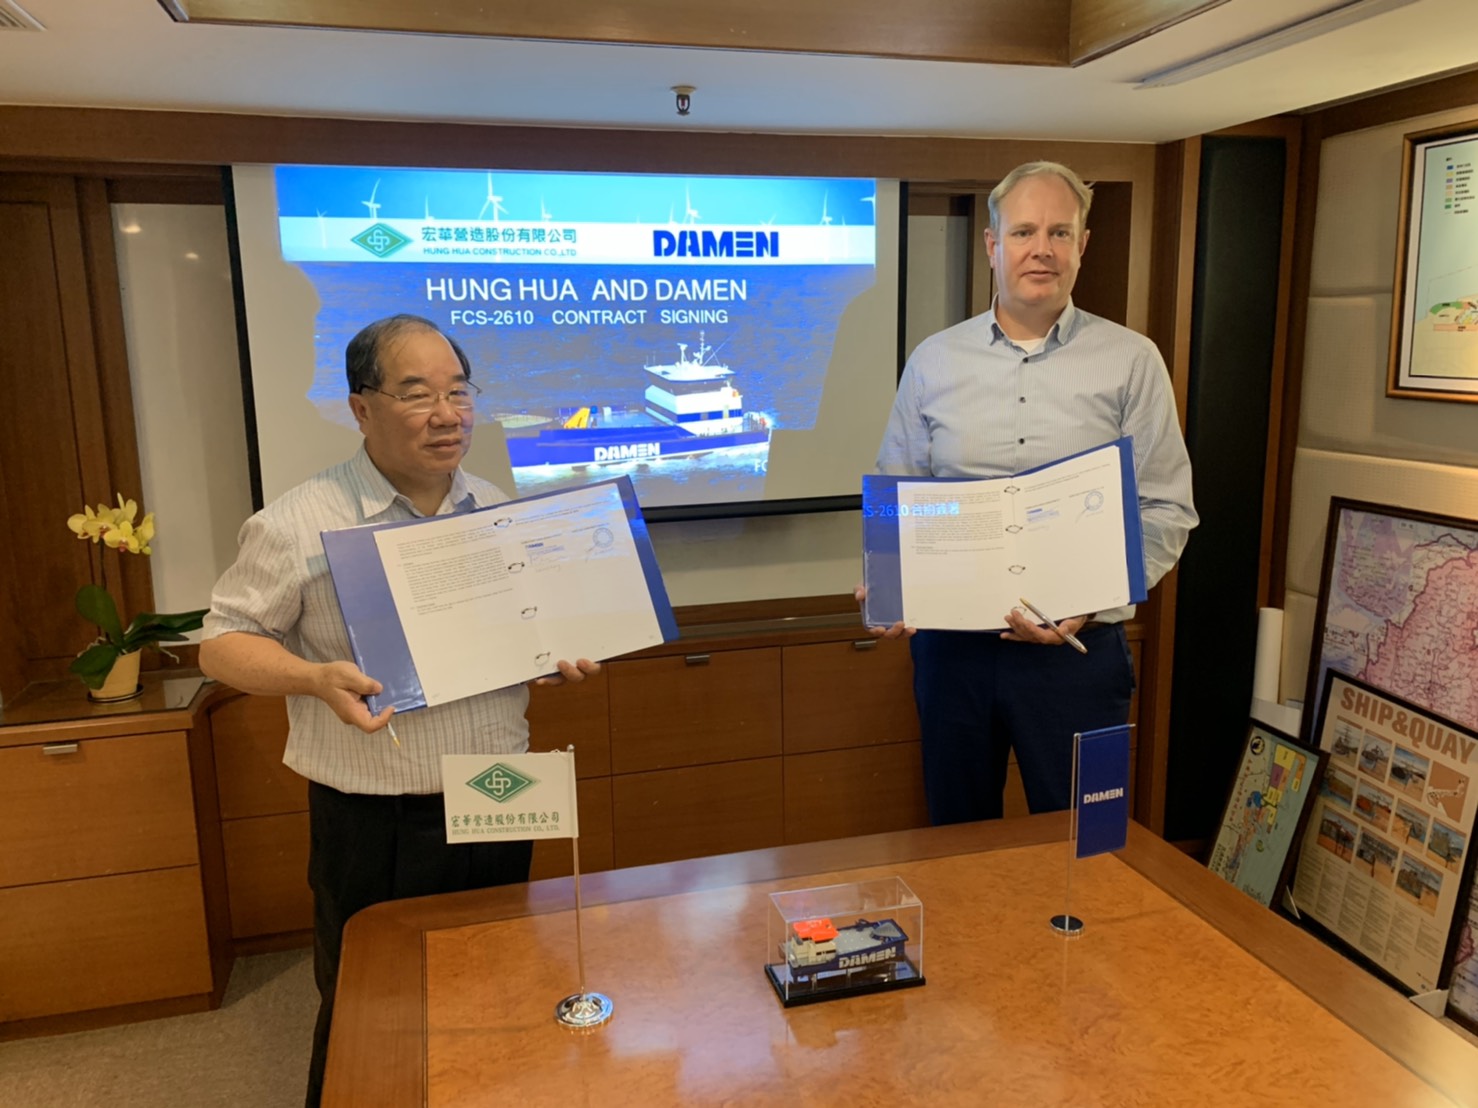 2 Hung Hua Construction and Damen contract signing